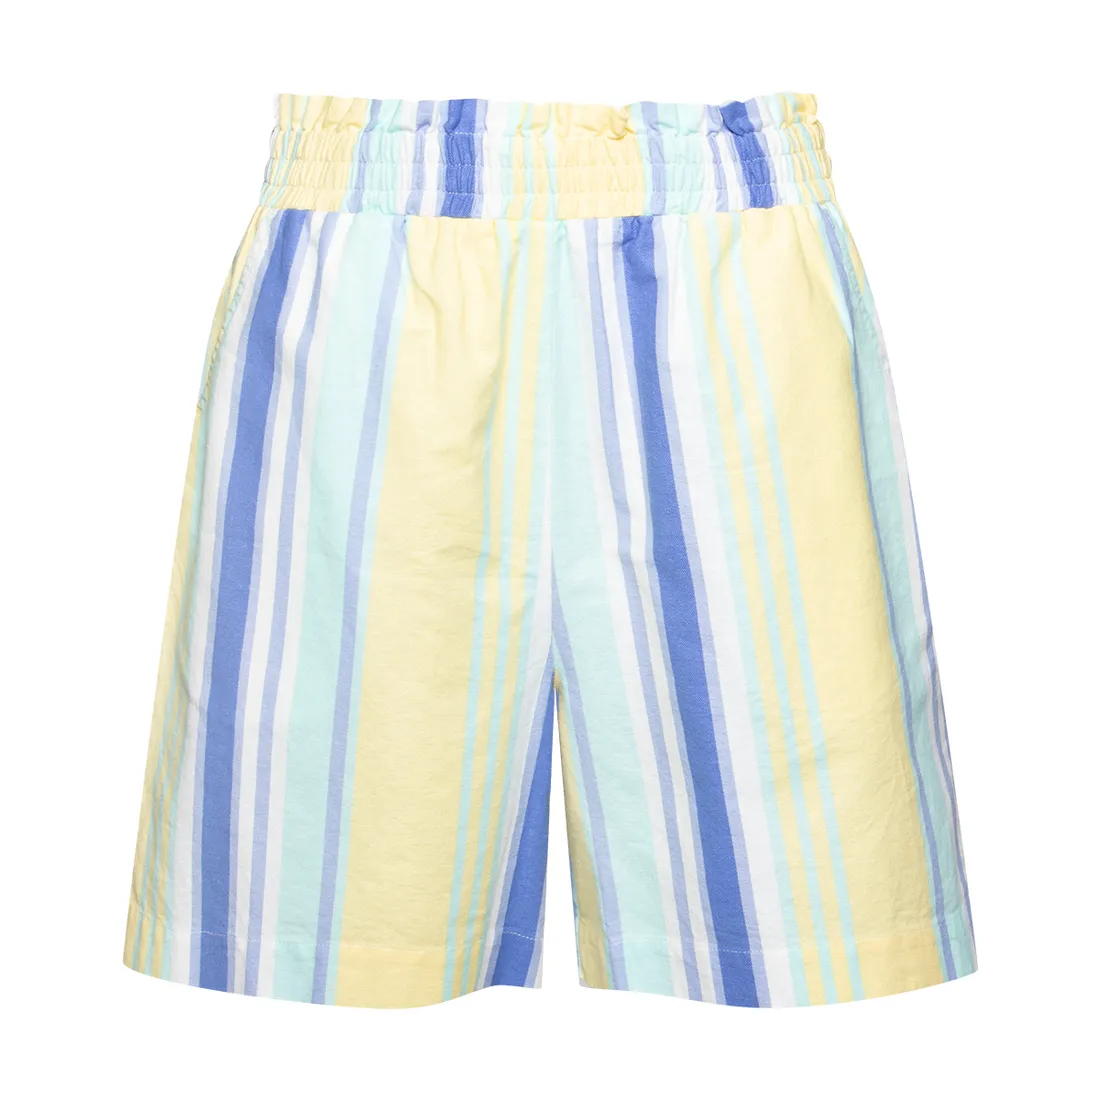 Stripe linen look pull on shorts multi - Women's Shorts | Ackermans